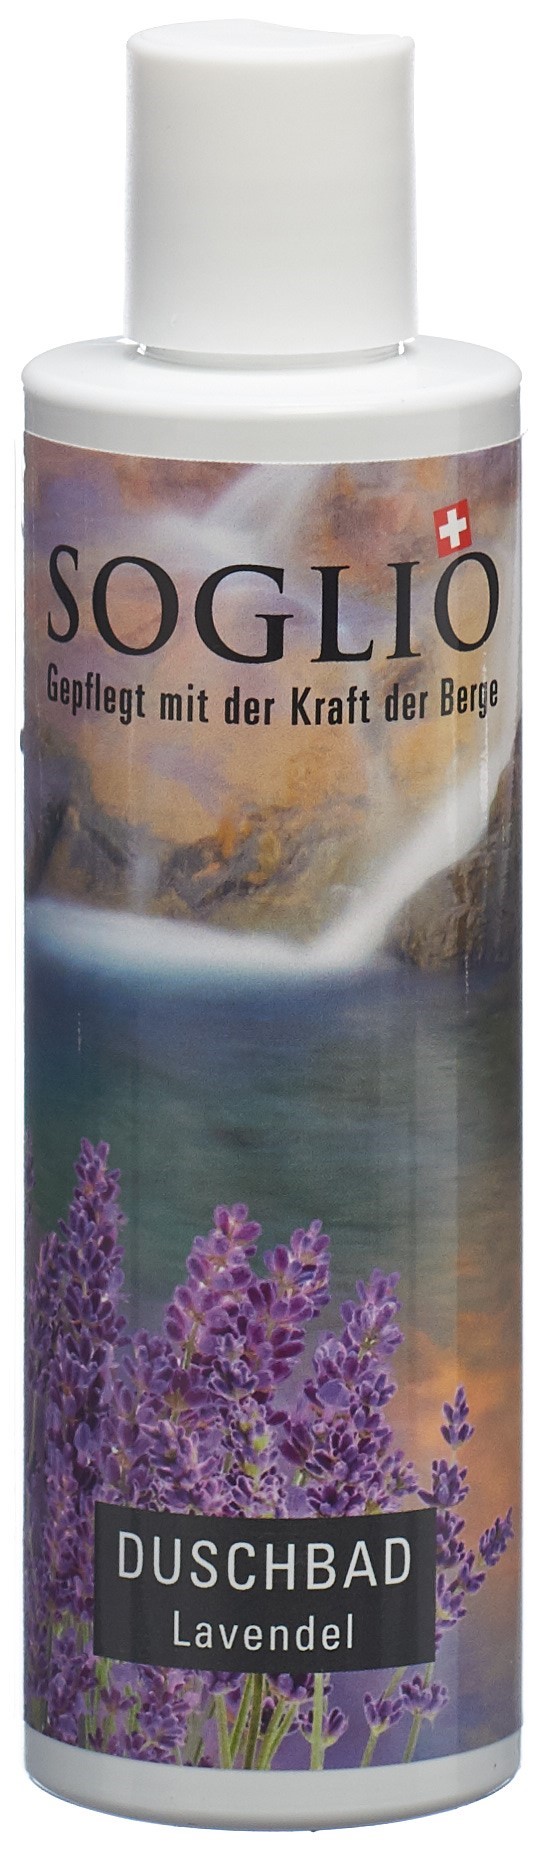 SOGLIO Duschbad Lavendel Fl 200 ml